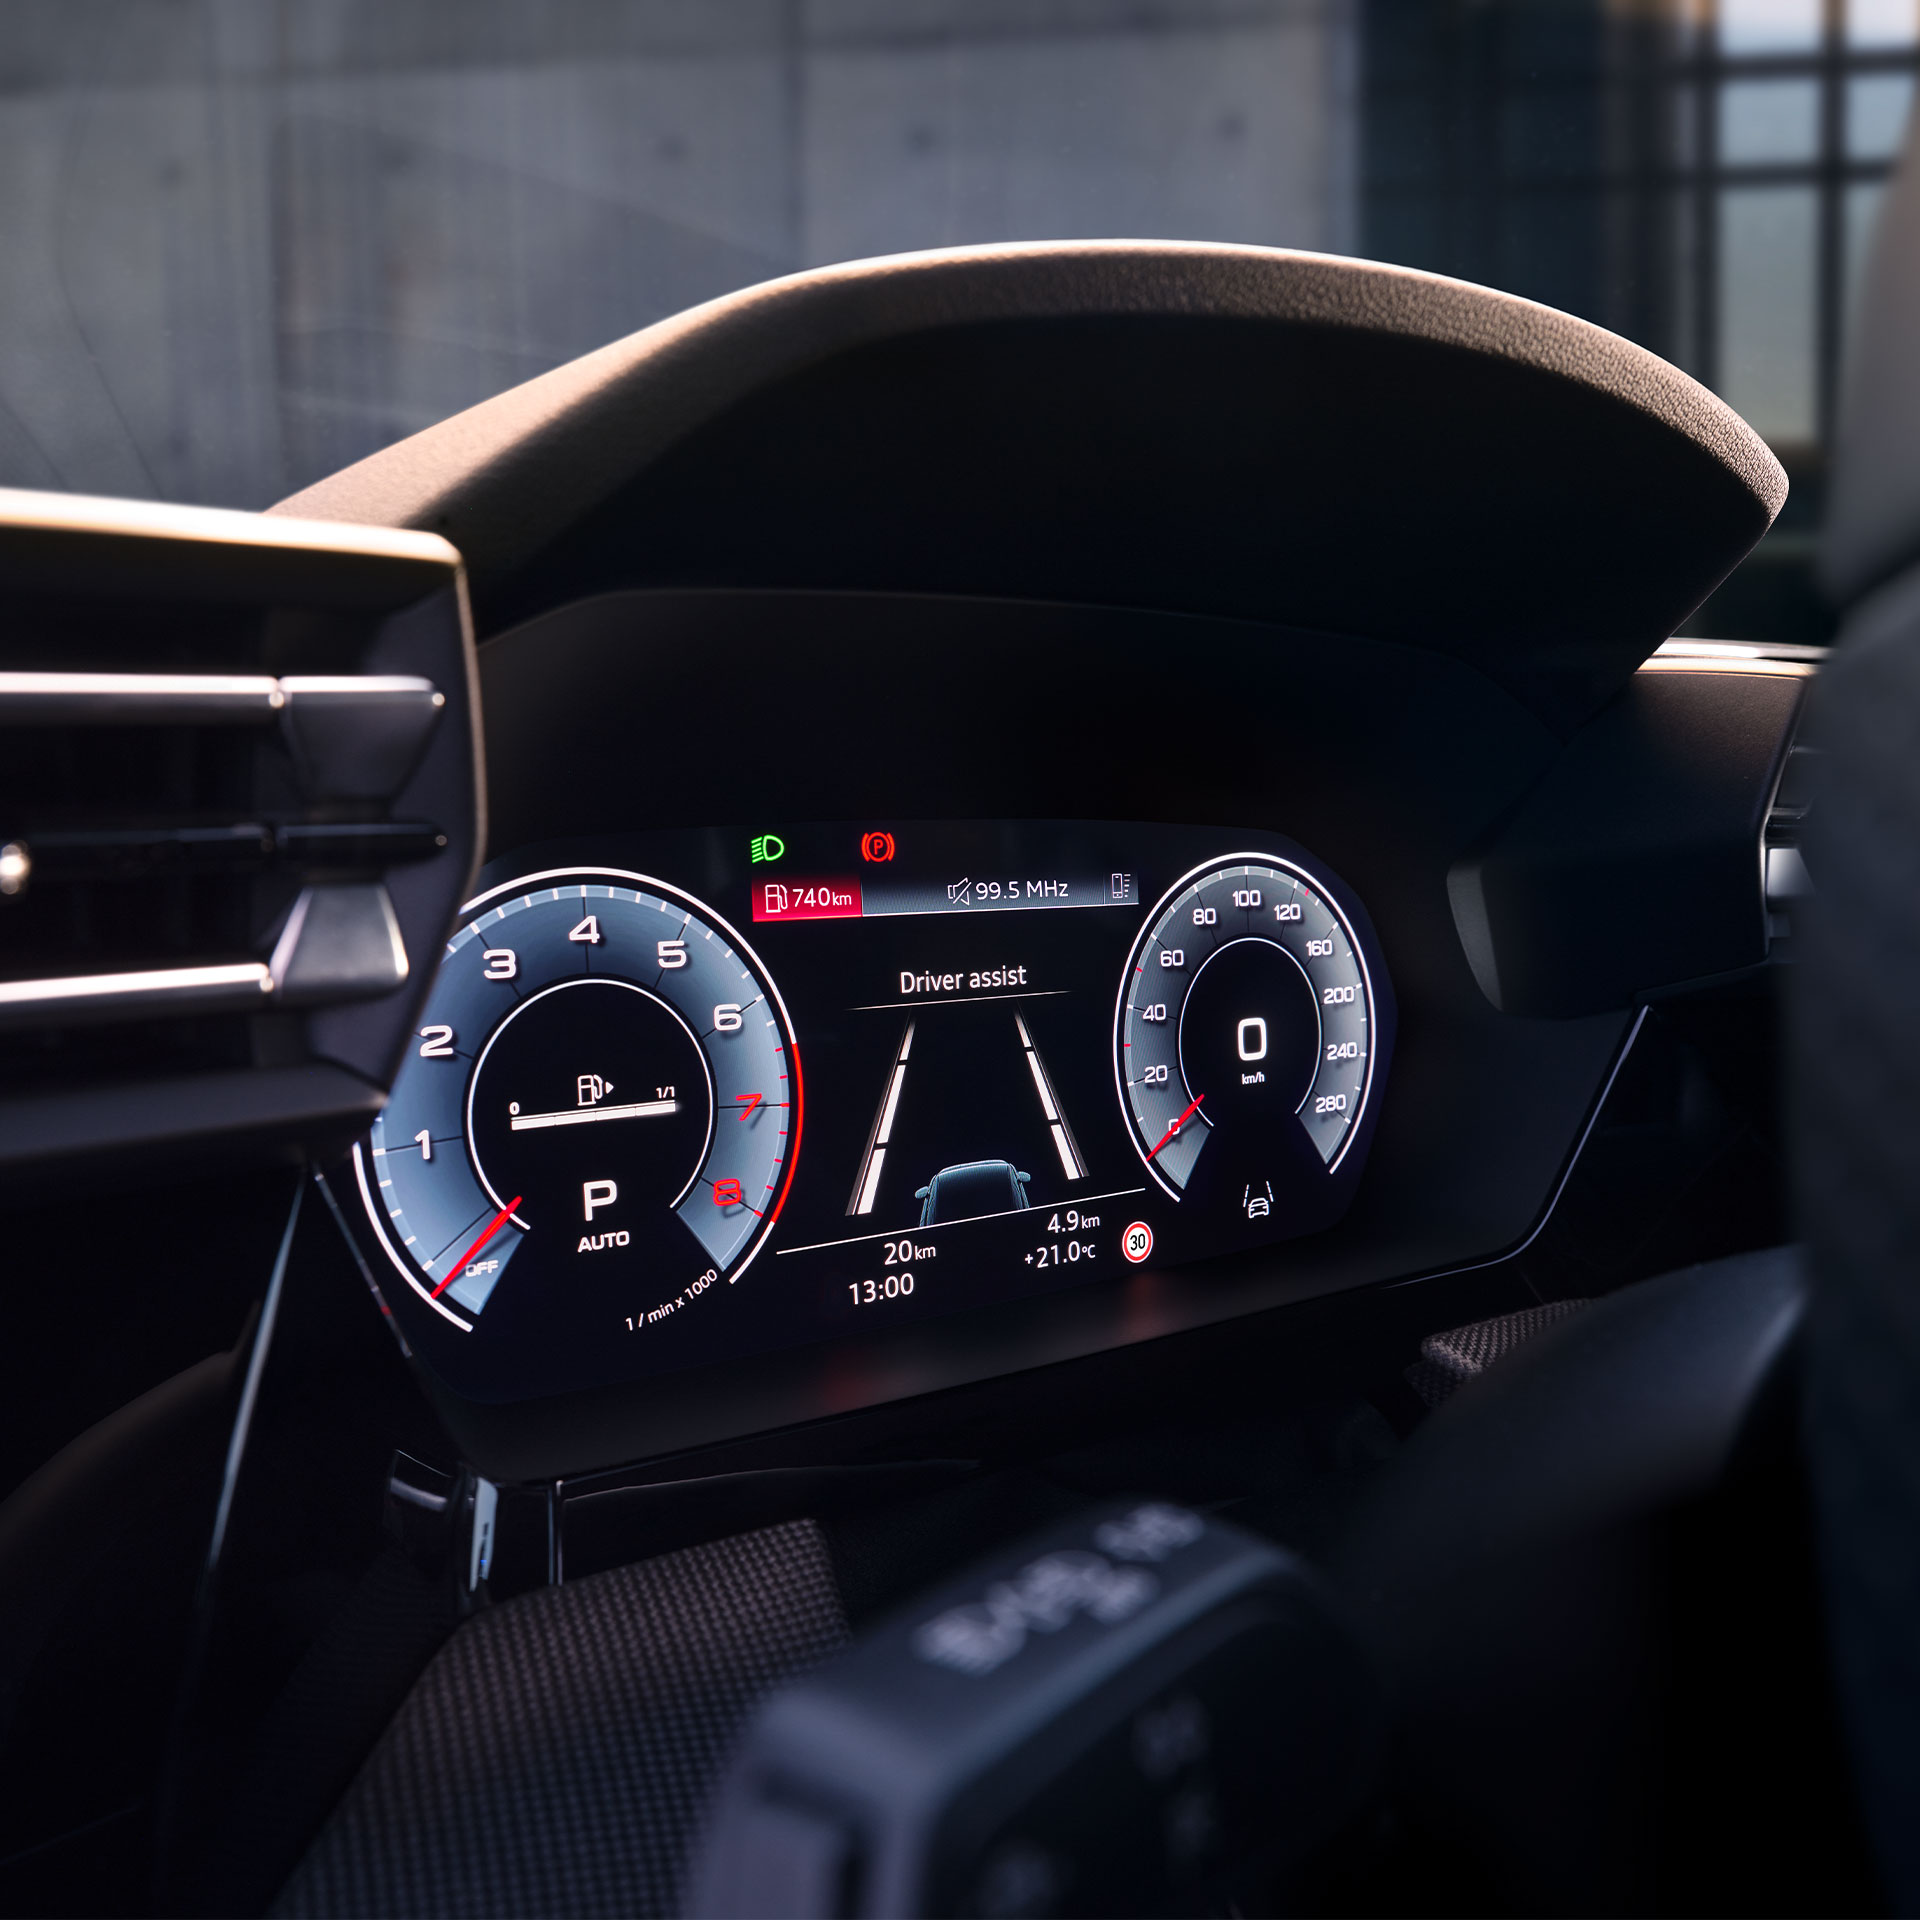 Audi A3 Sportback Cockpit